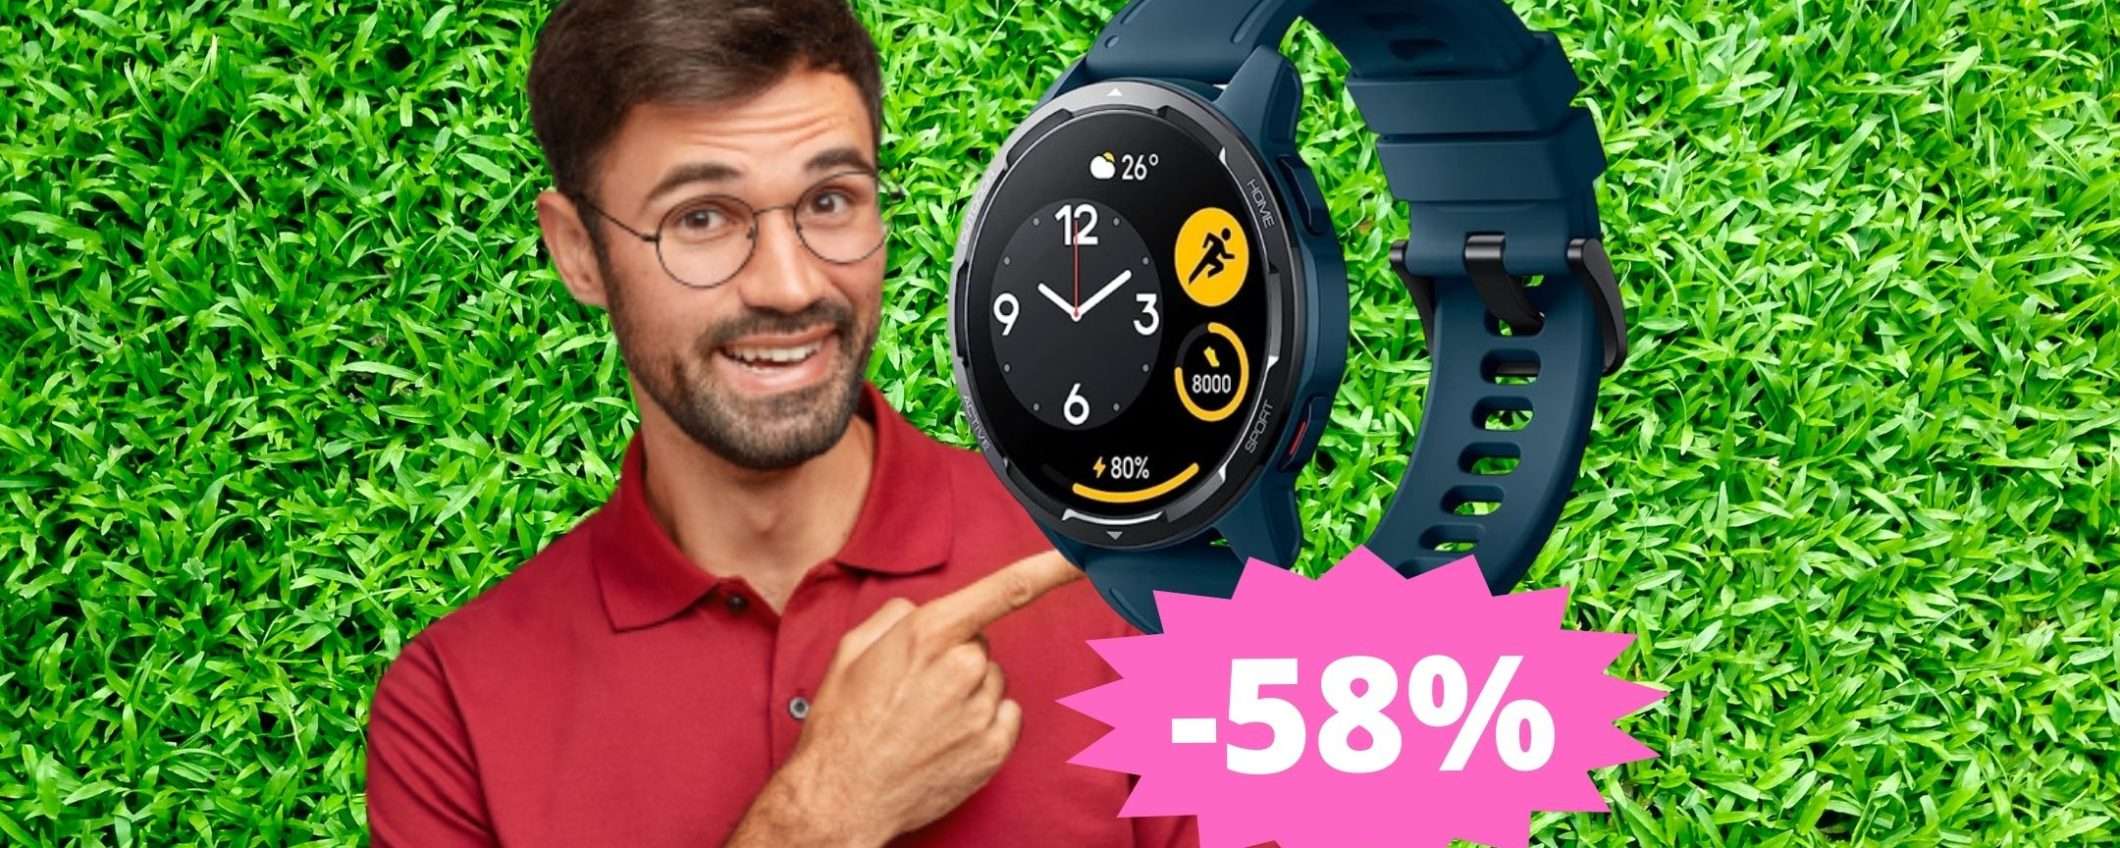 Xiaomi Watch S1 Active: AFFARE unico su Amazon (-58%)